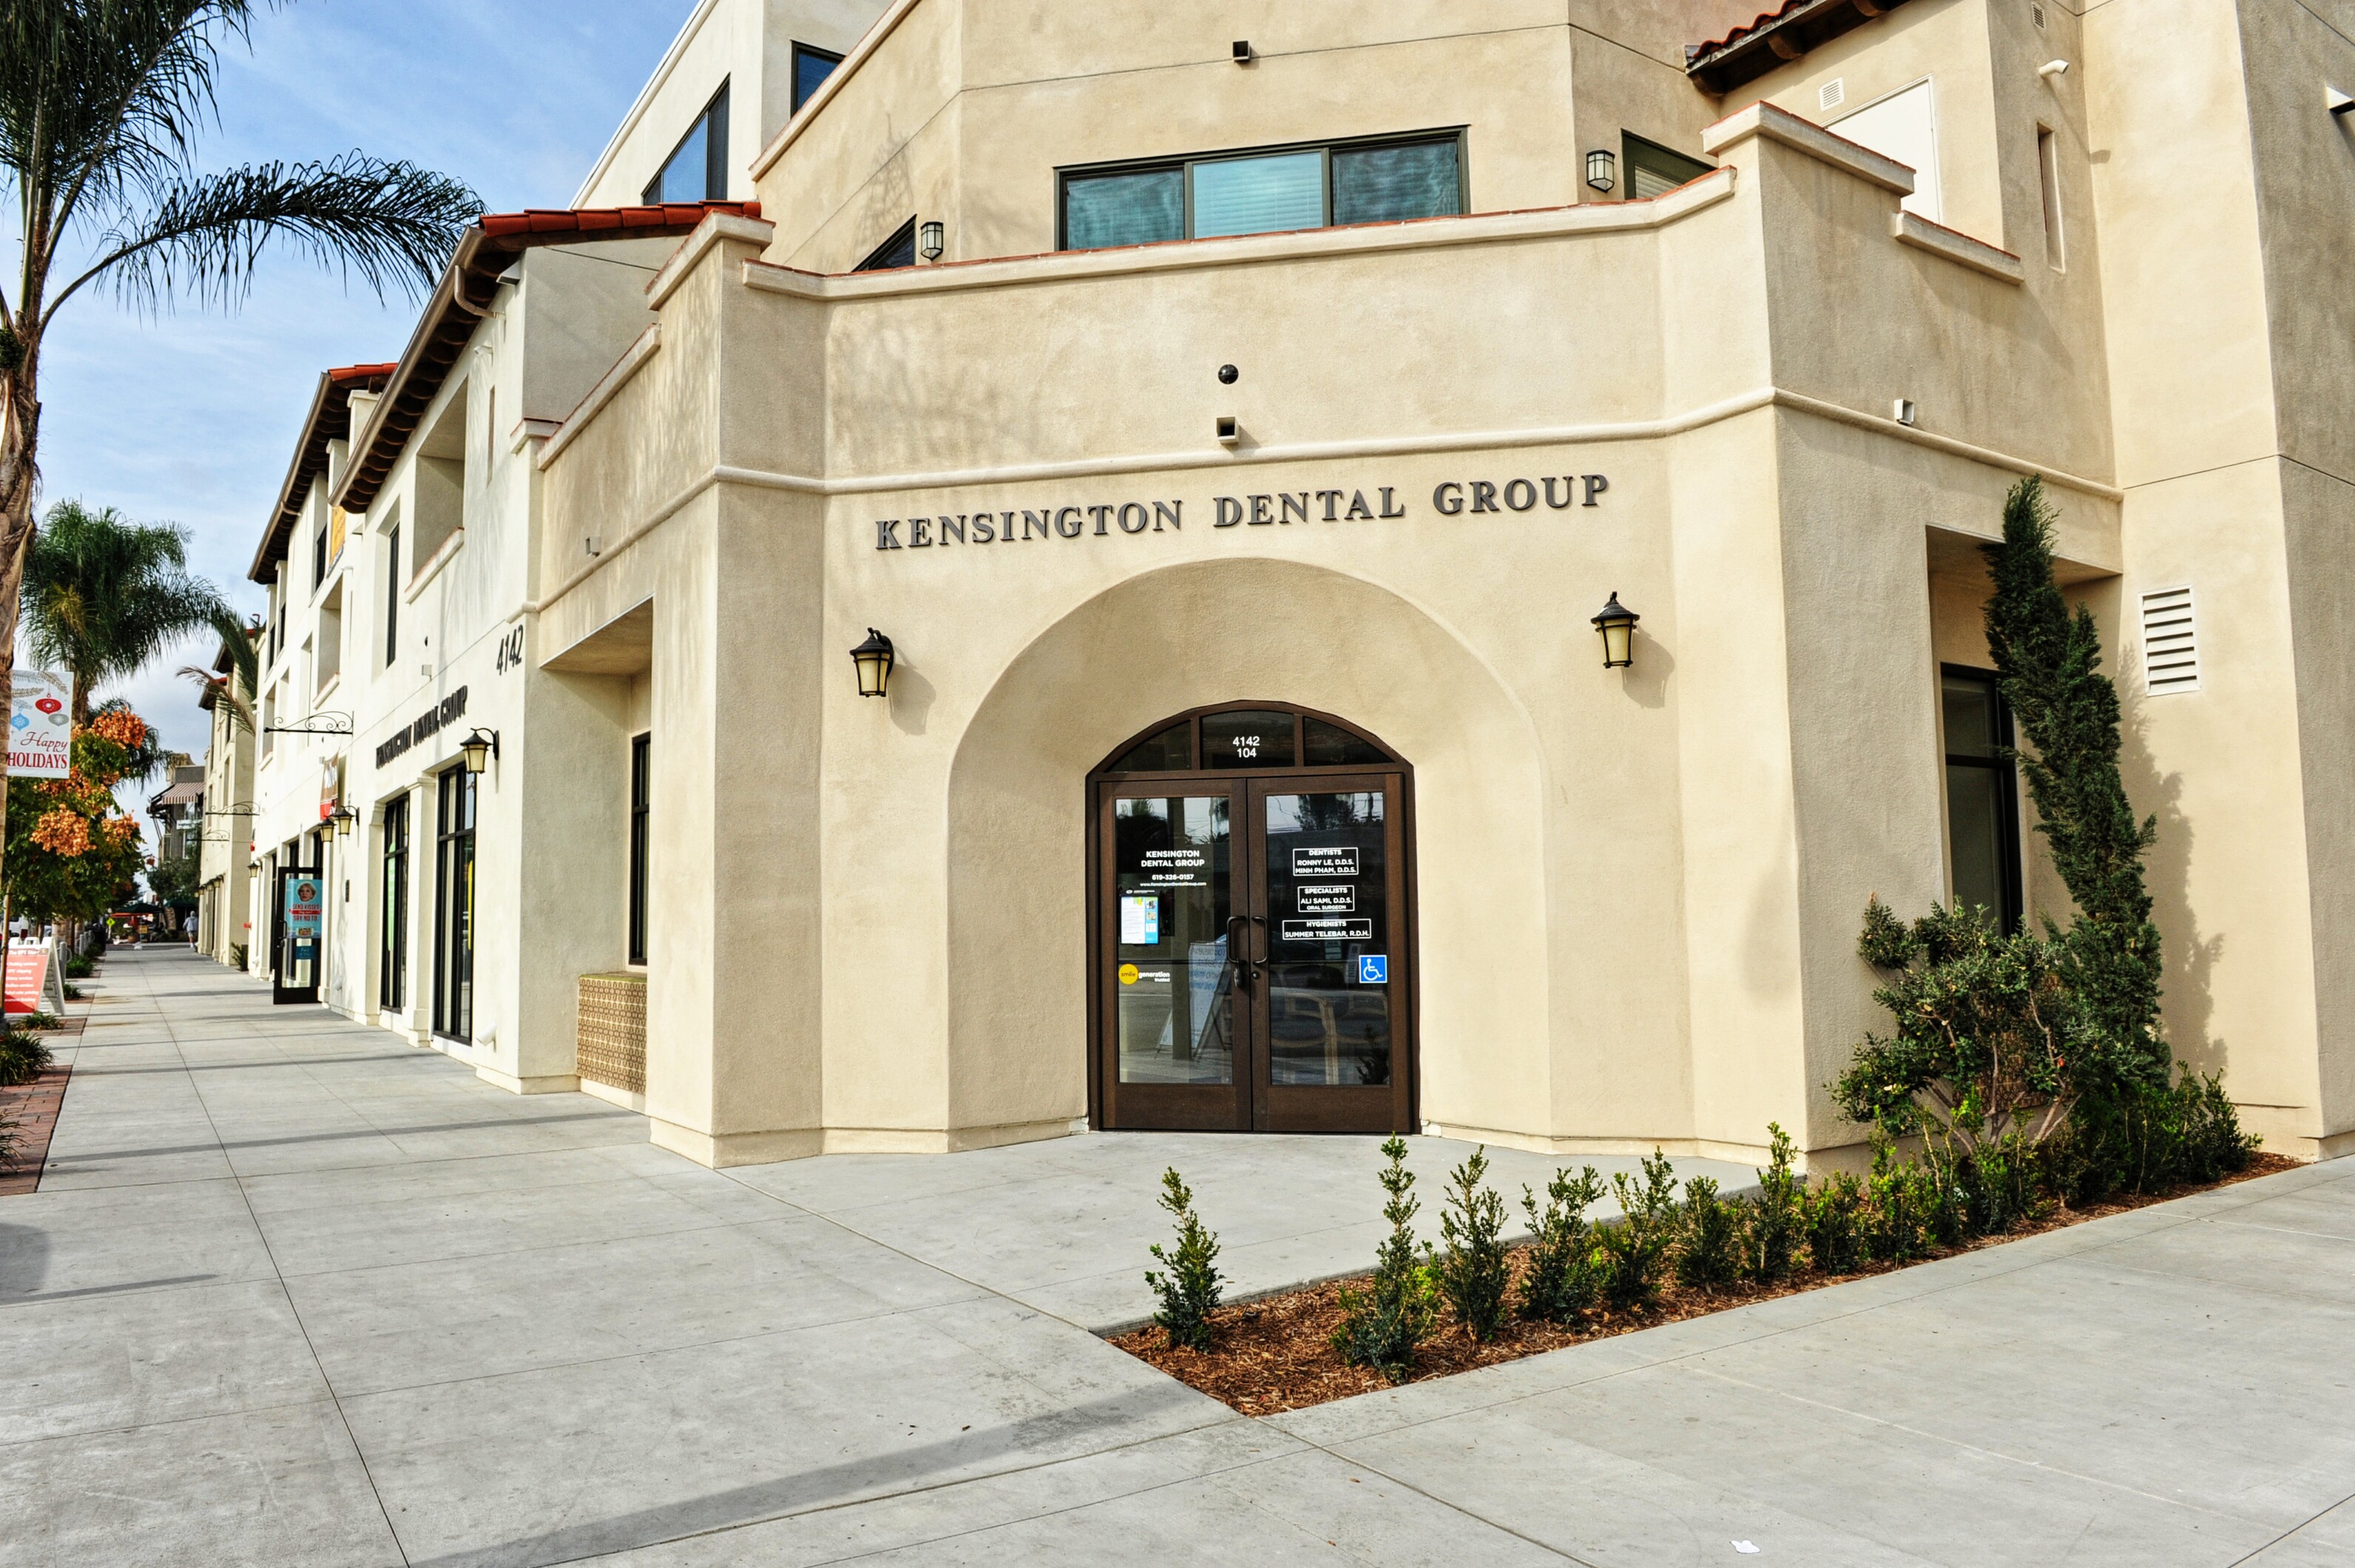 Kensington Dental Group in San Diego, CA 92116 - ChamberofCommerce.com